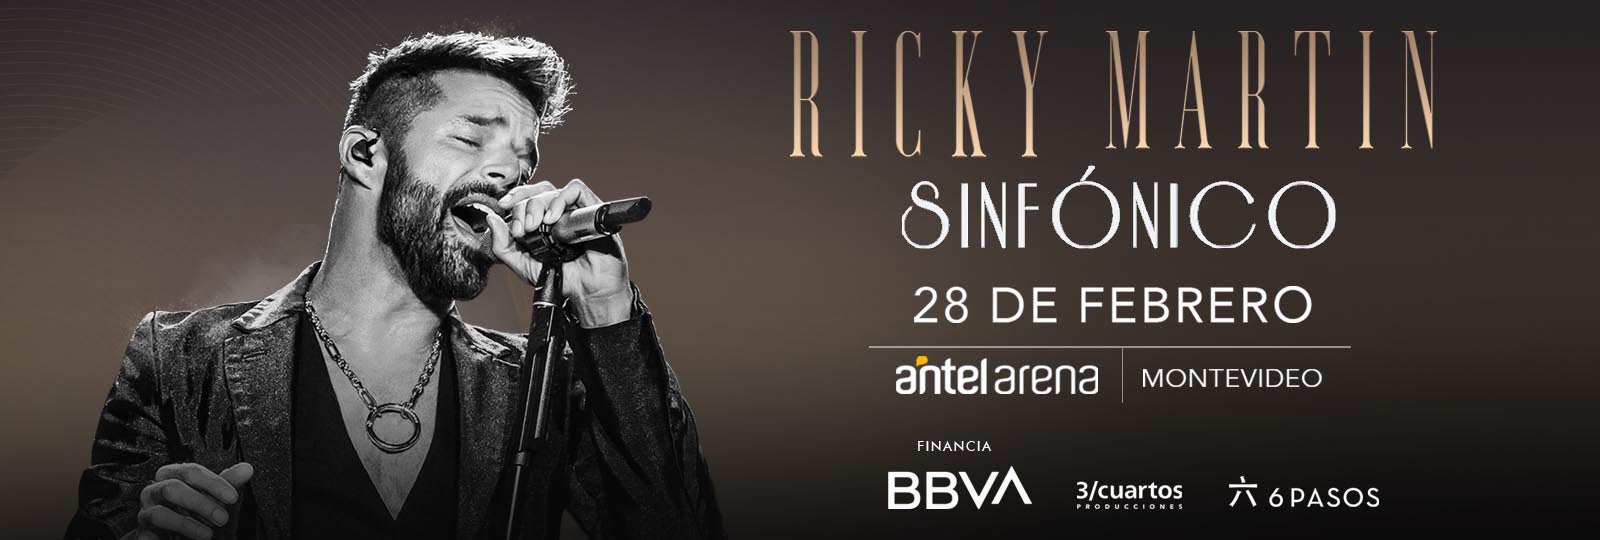 Ricky Martin Antel Arena